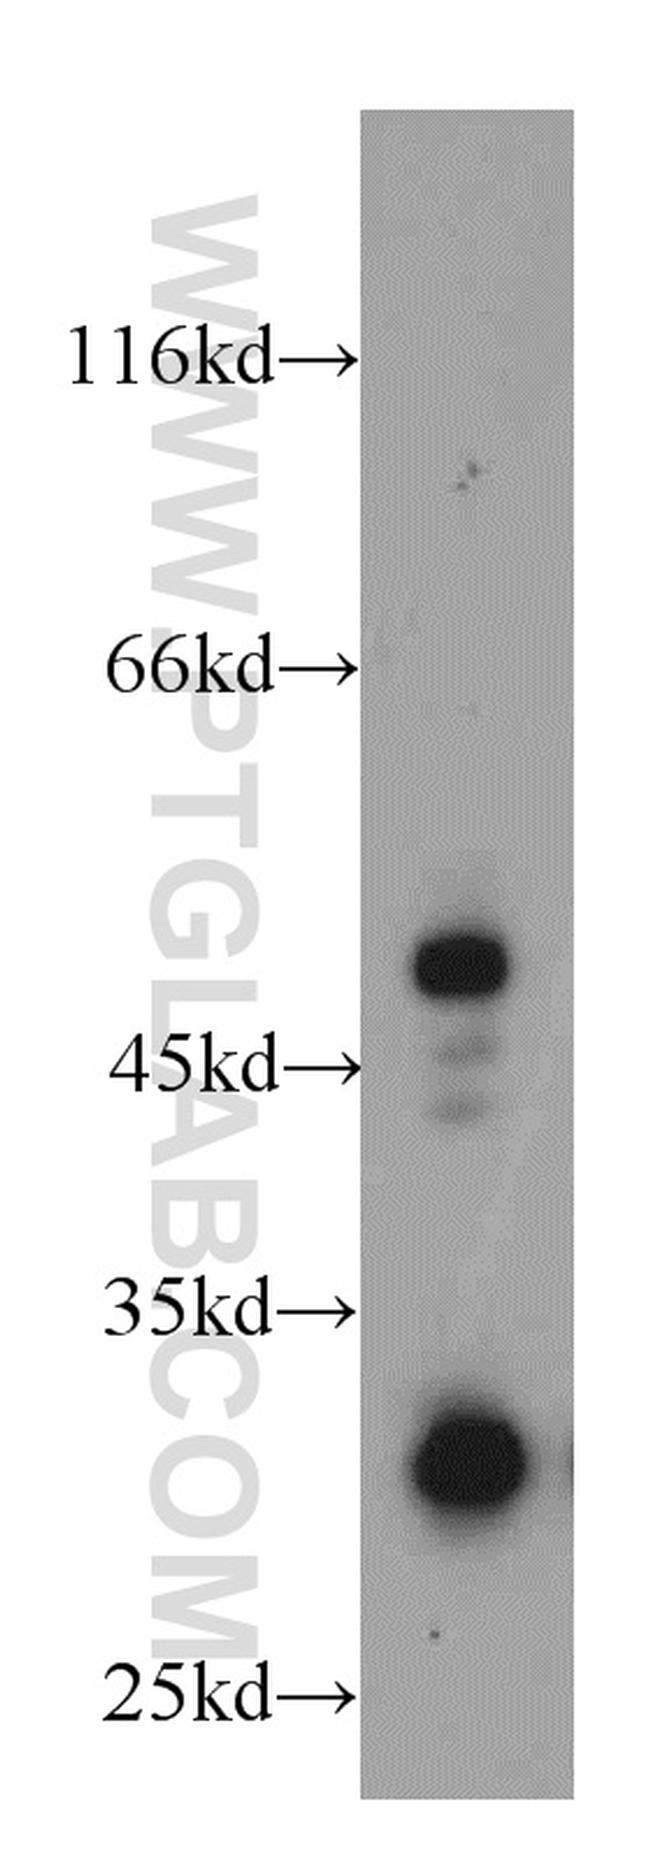 HUS1B Antibody in Western Blot (WB)